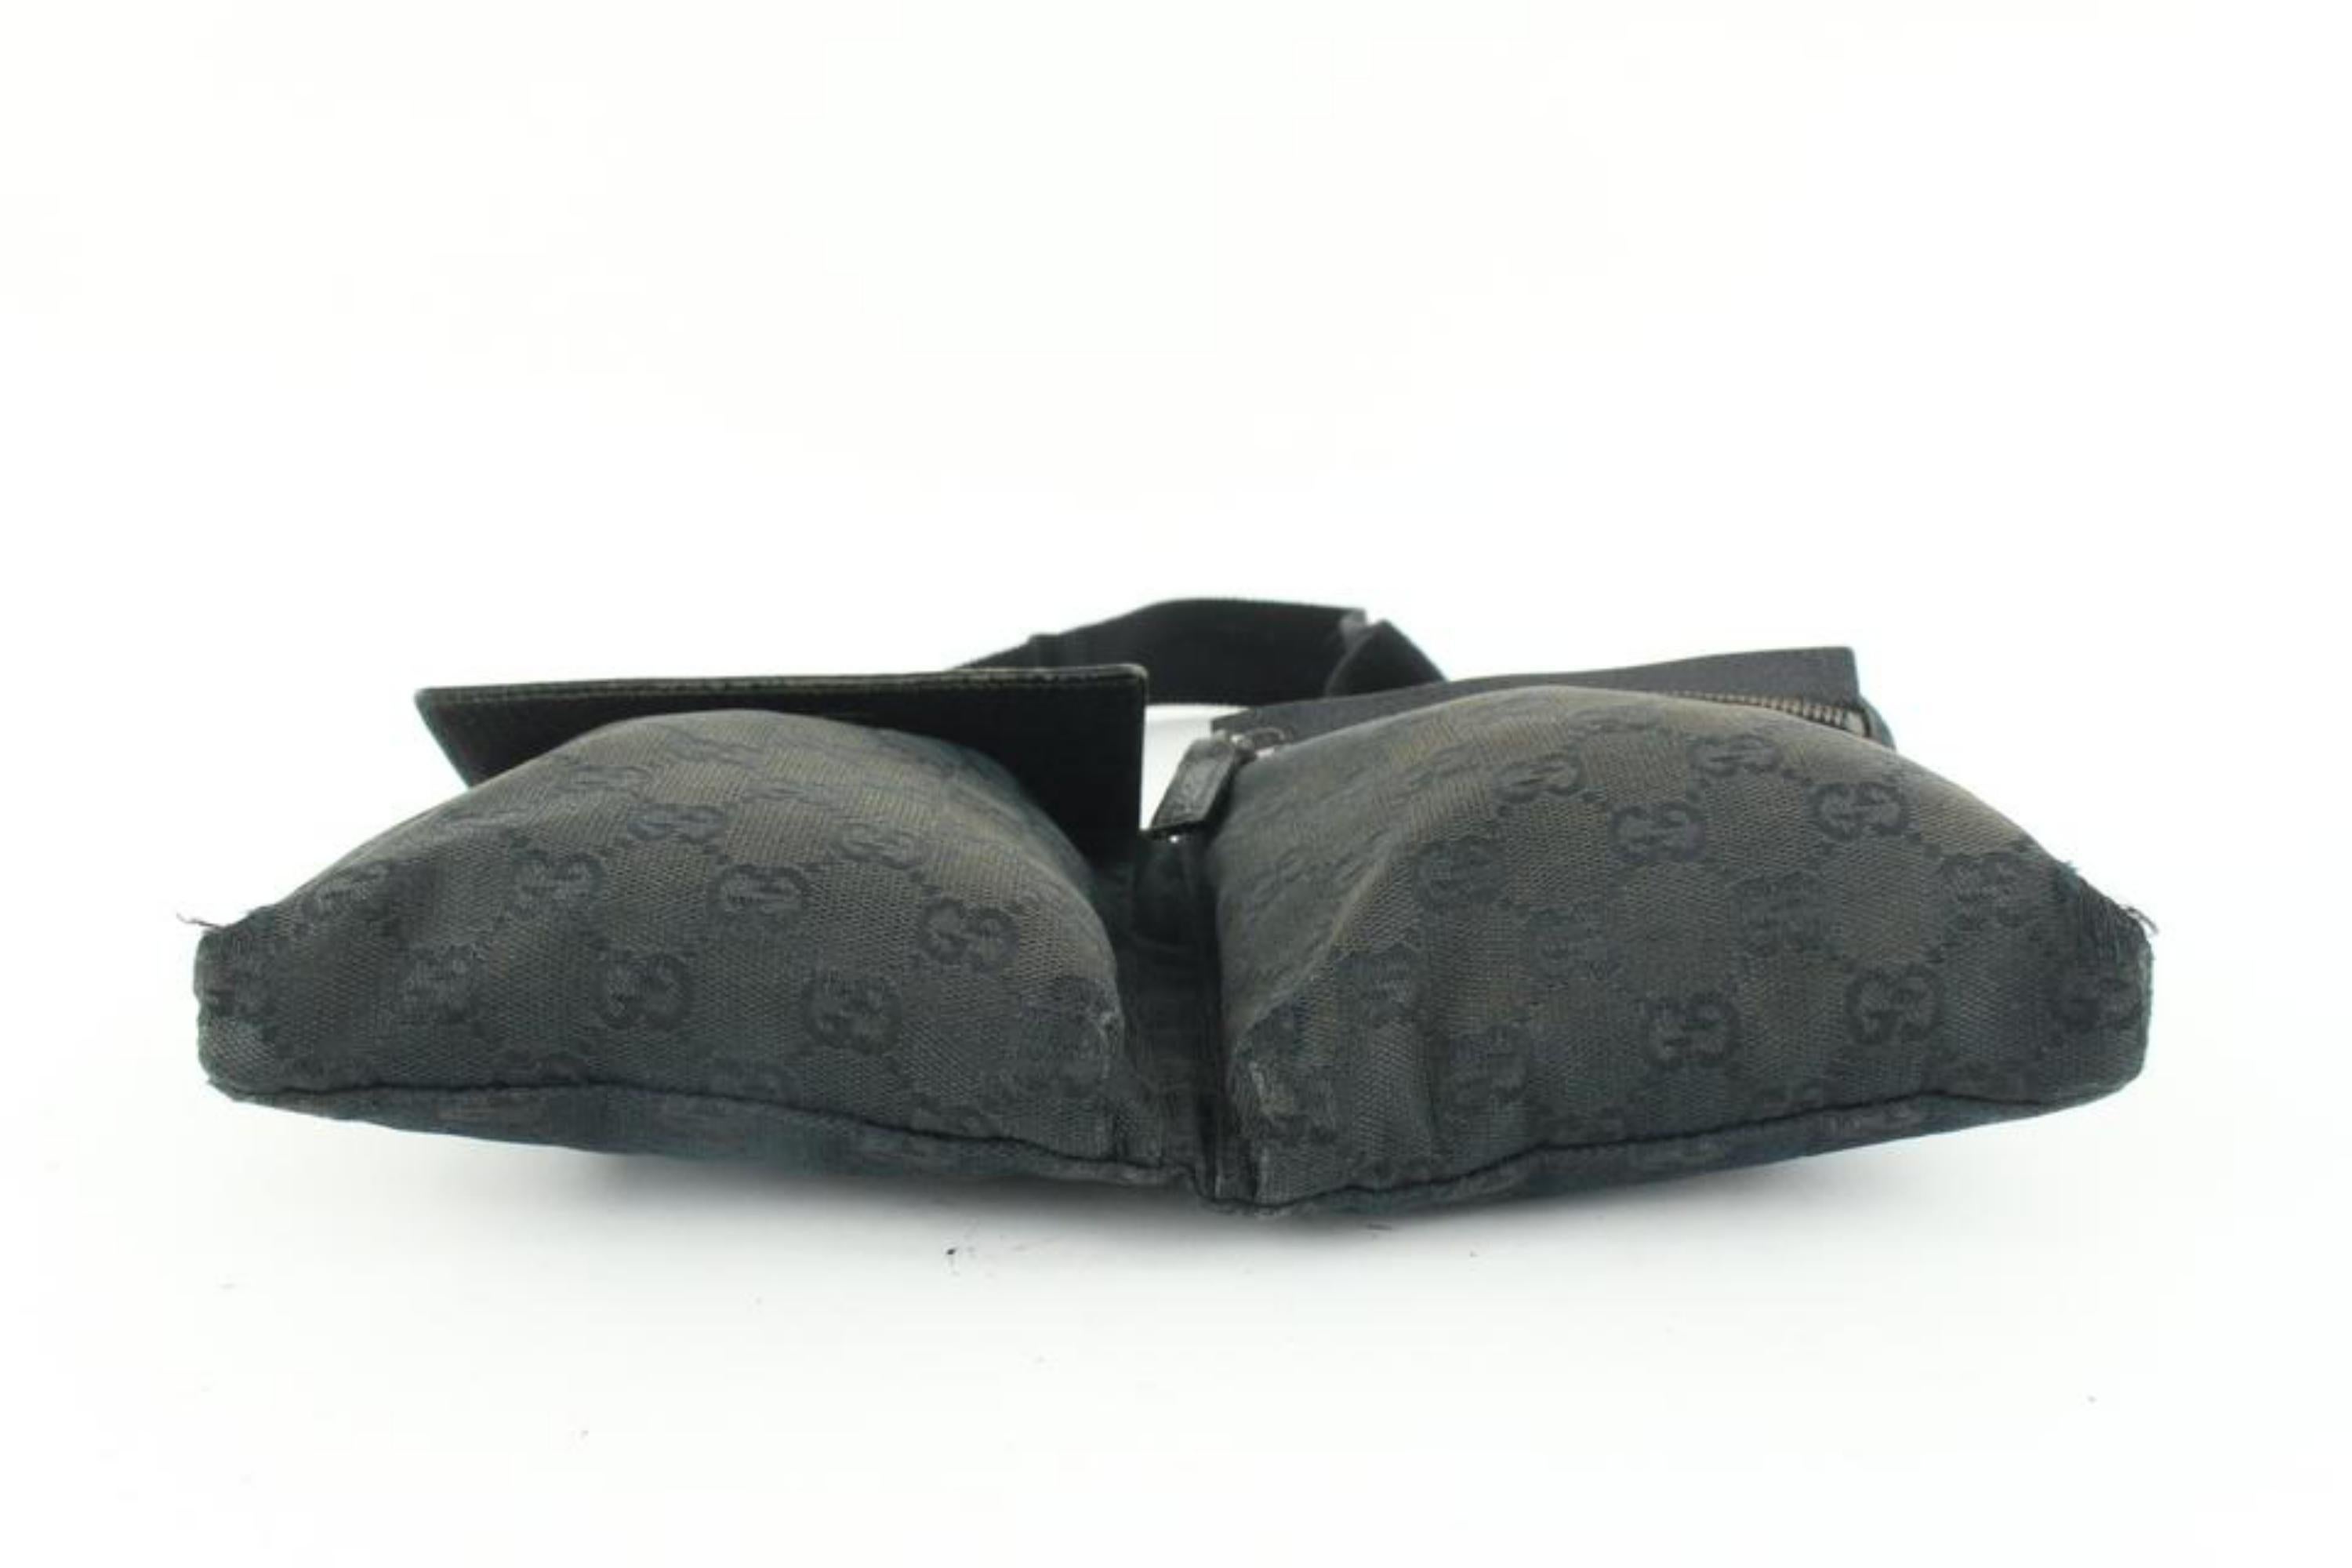 Gucci Black Monogram GG Belt Bag Fanny Pack Waist Pouch 16g29 For Sale 5